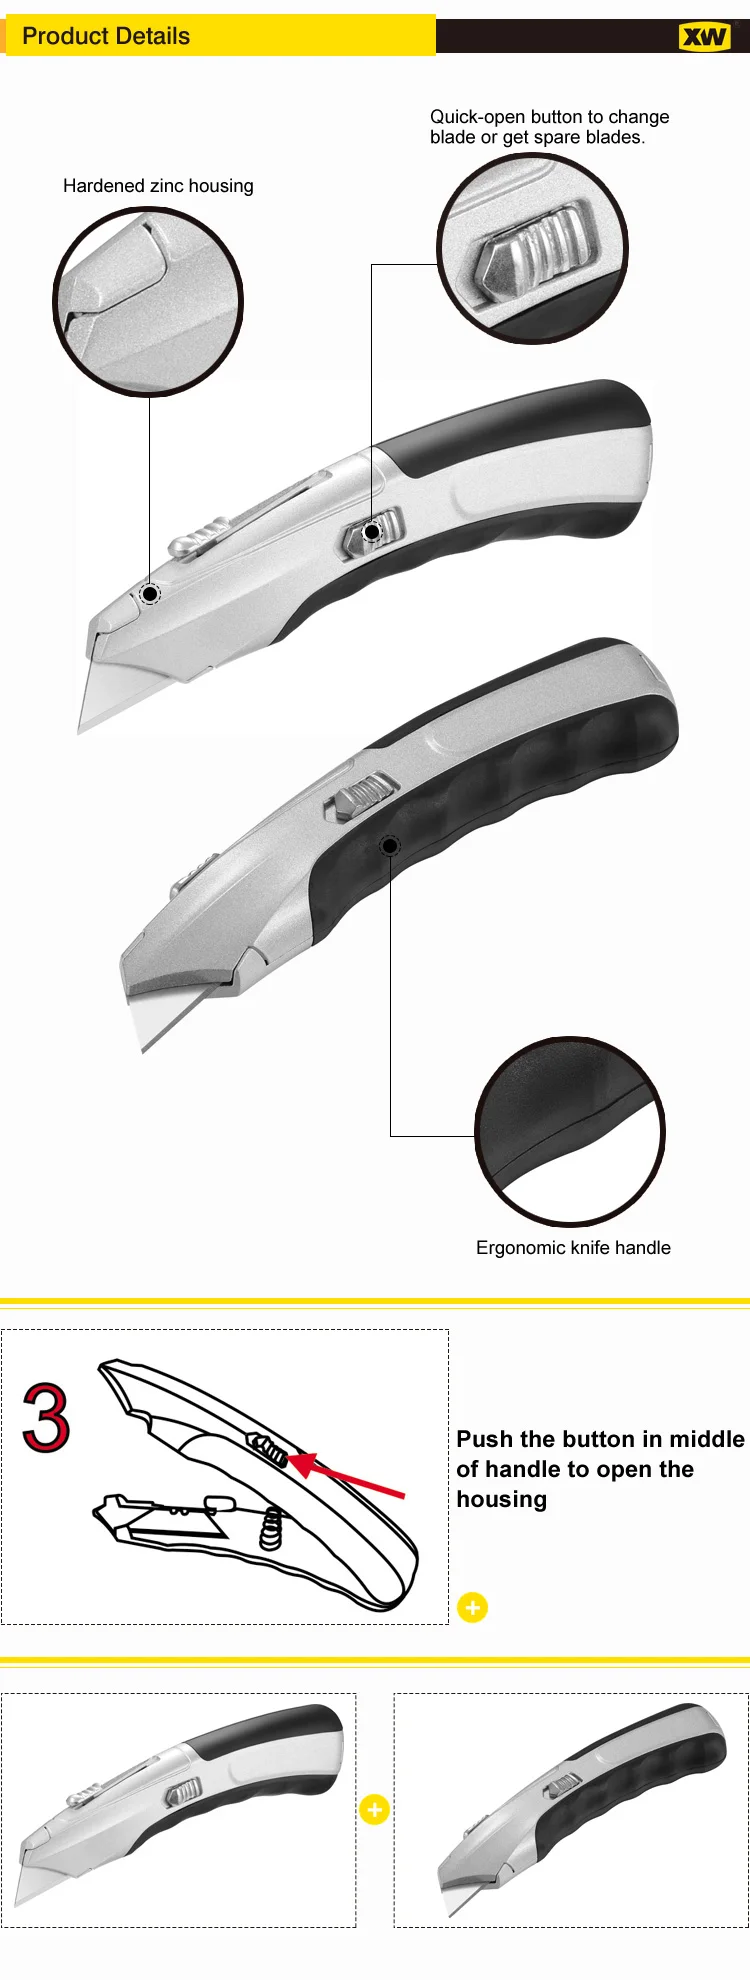 ErgonomicTPR rubber handle zinc housing replacement blades utility knife